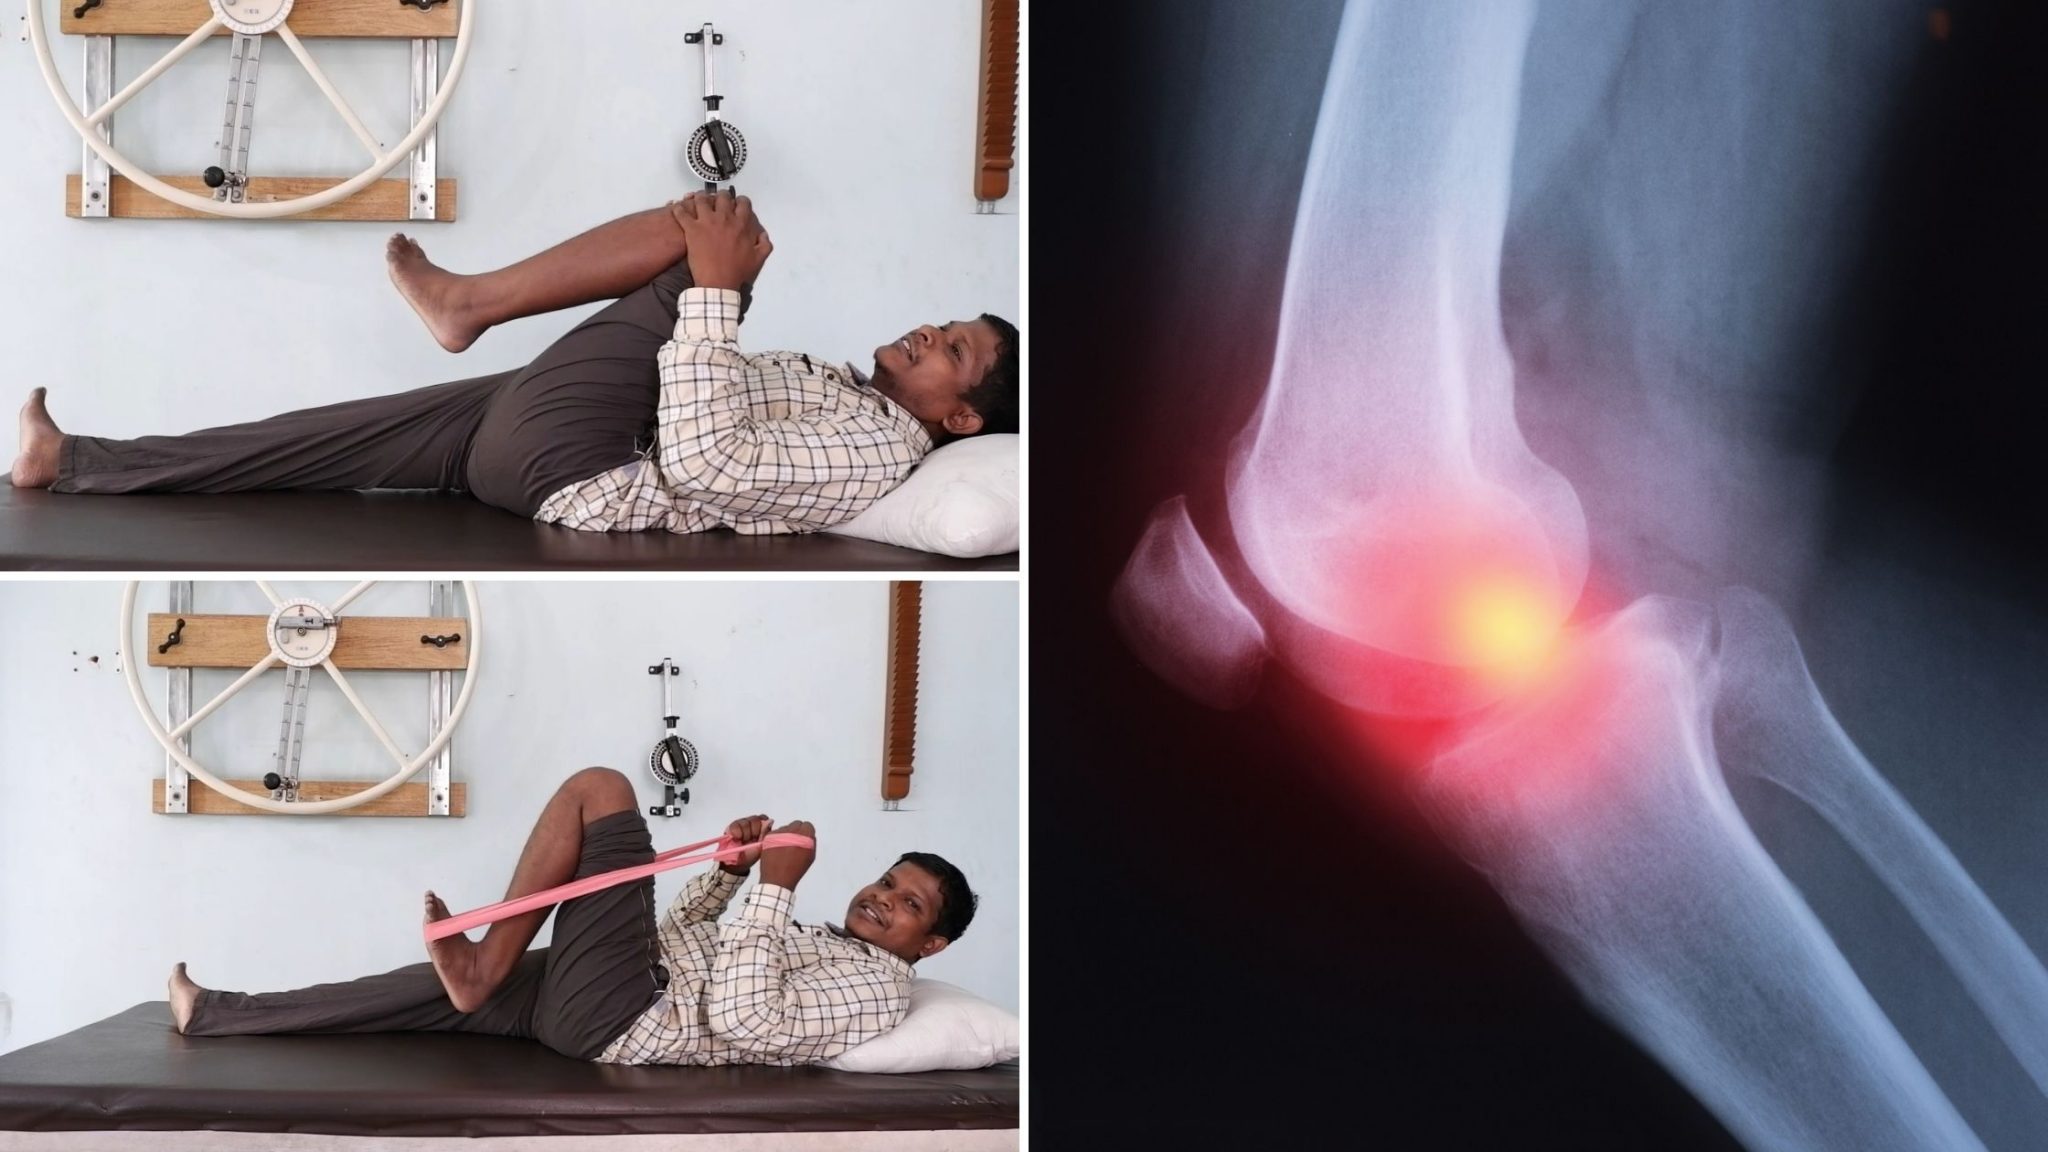 9 Best Knee Rheumatoid Arthritis Exercises for Stiffness, Pain ...